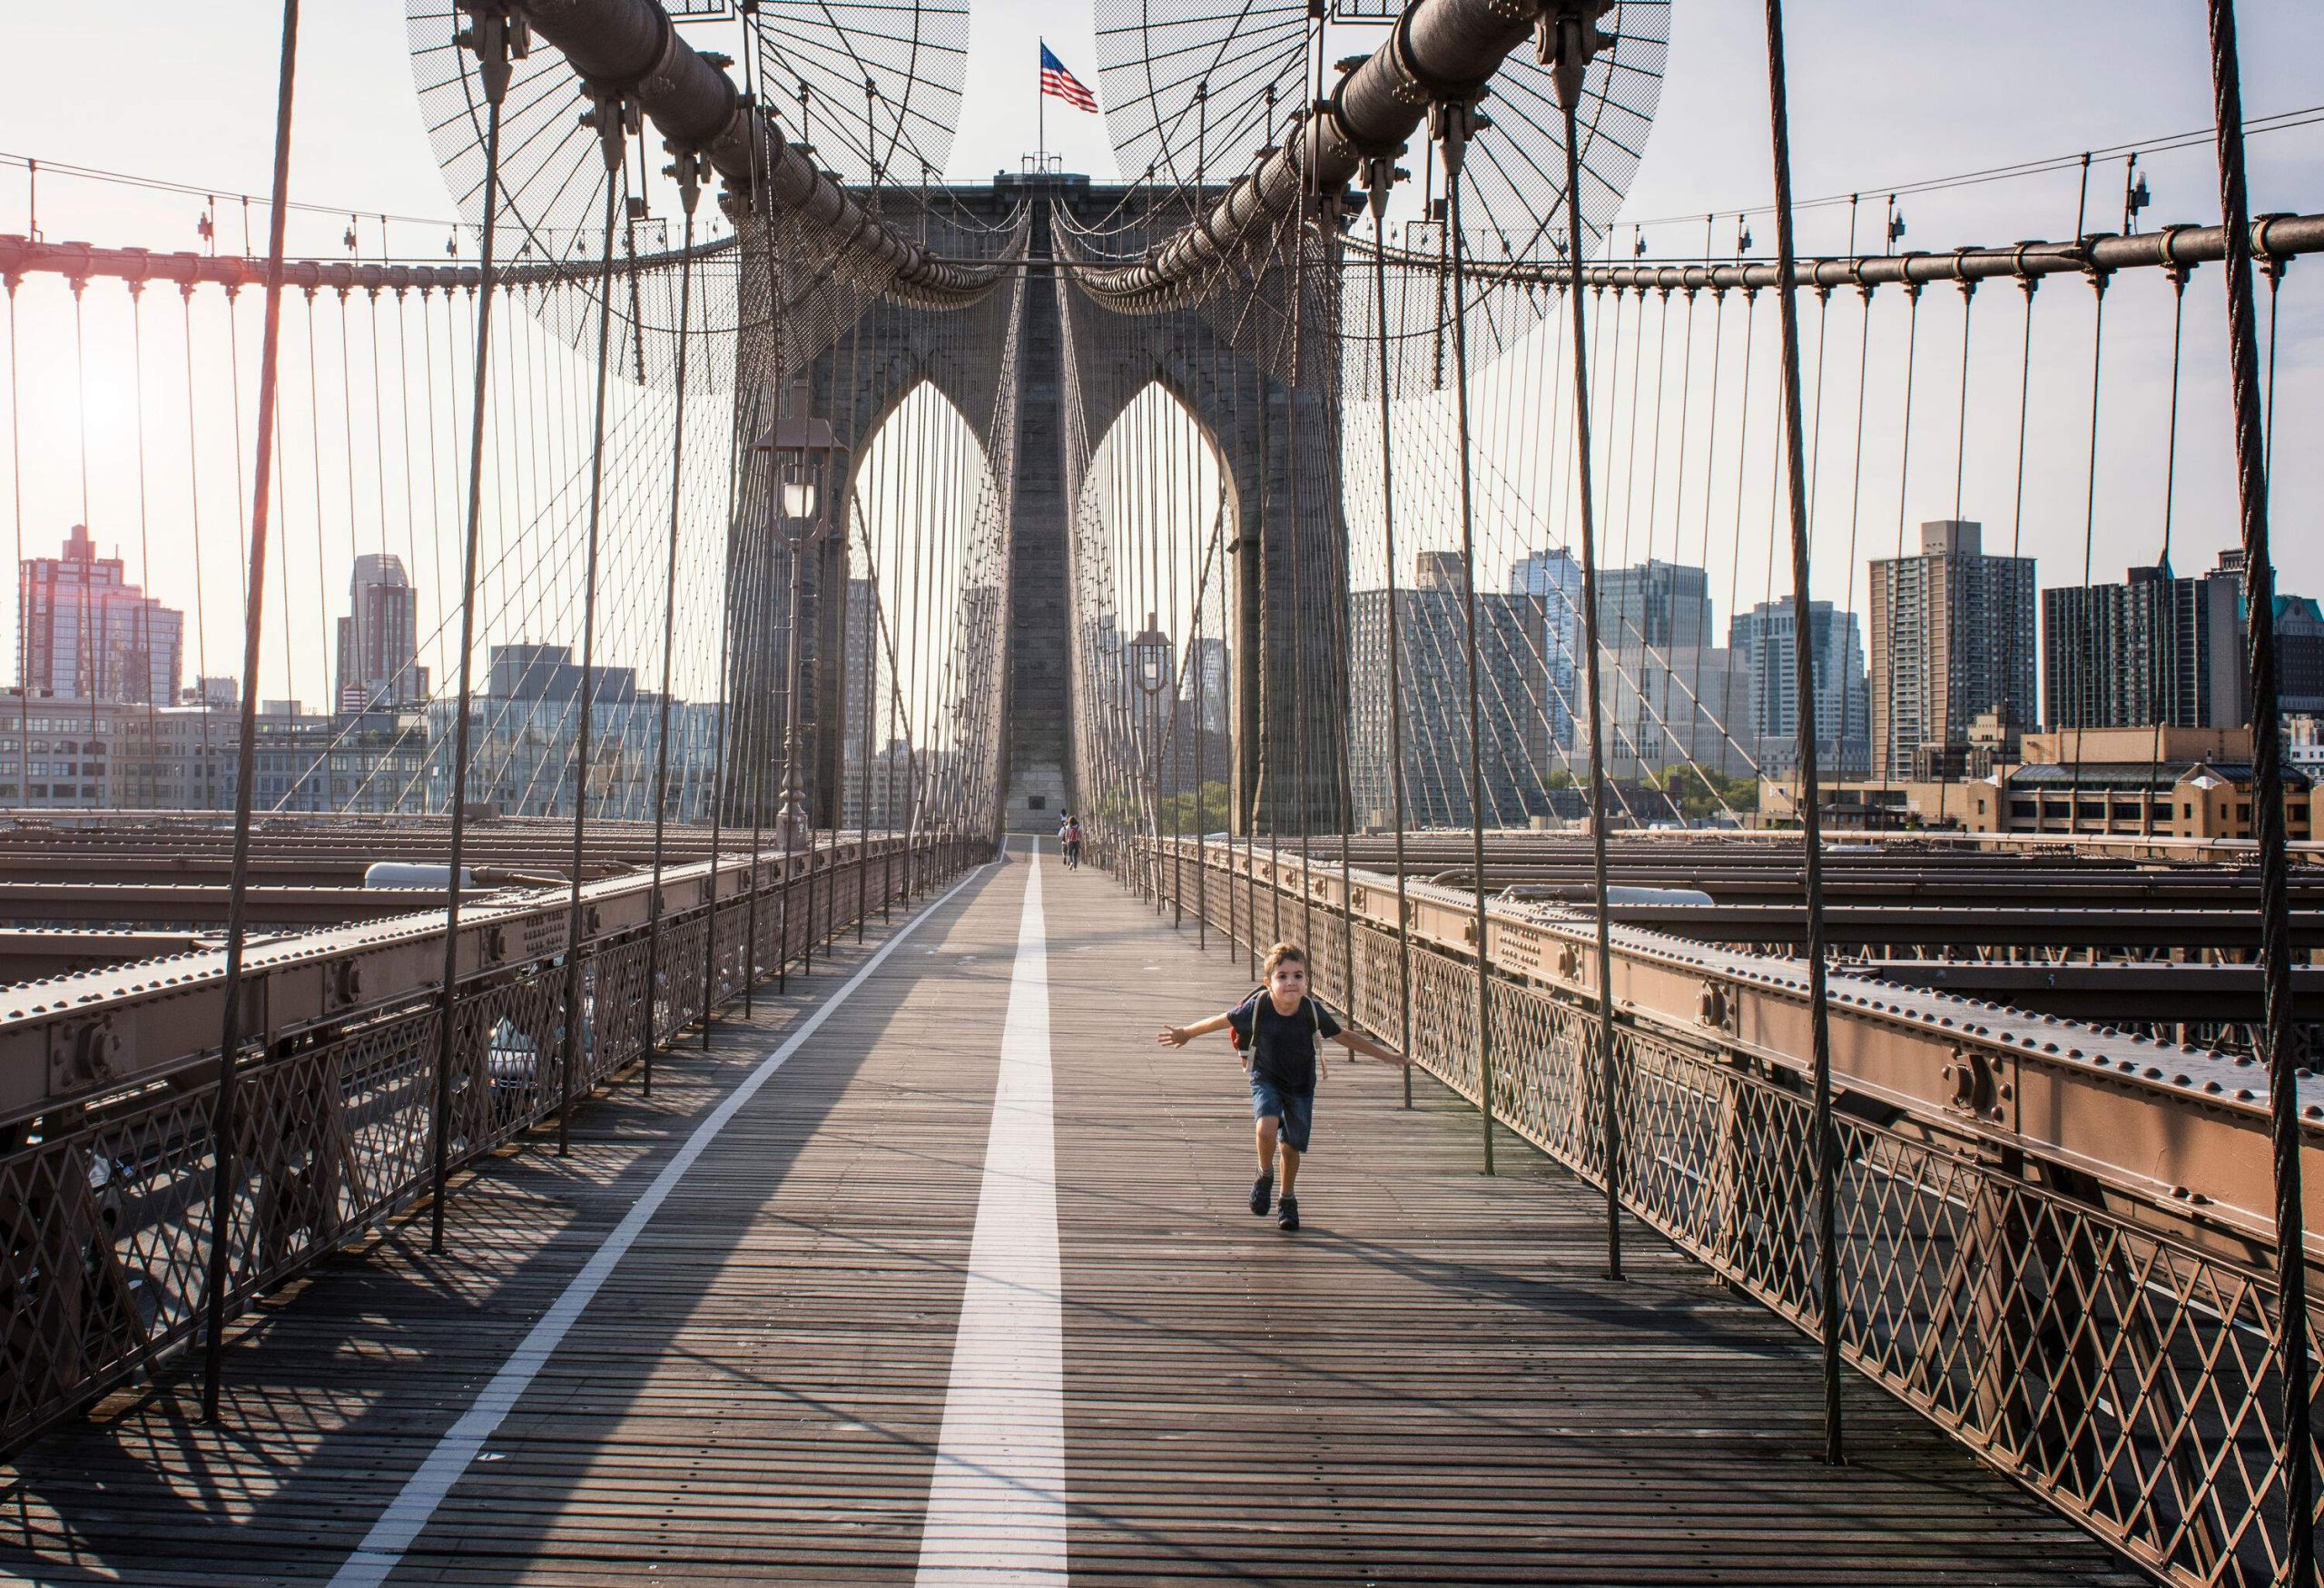 A boy runs across a footbridge with distant views of the city skyline.